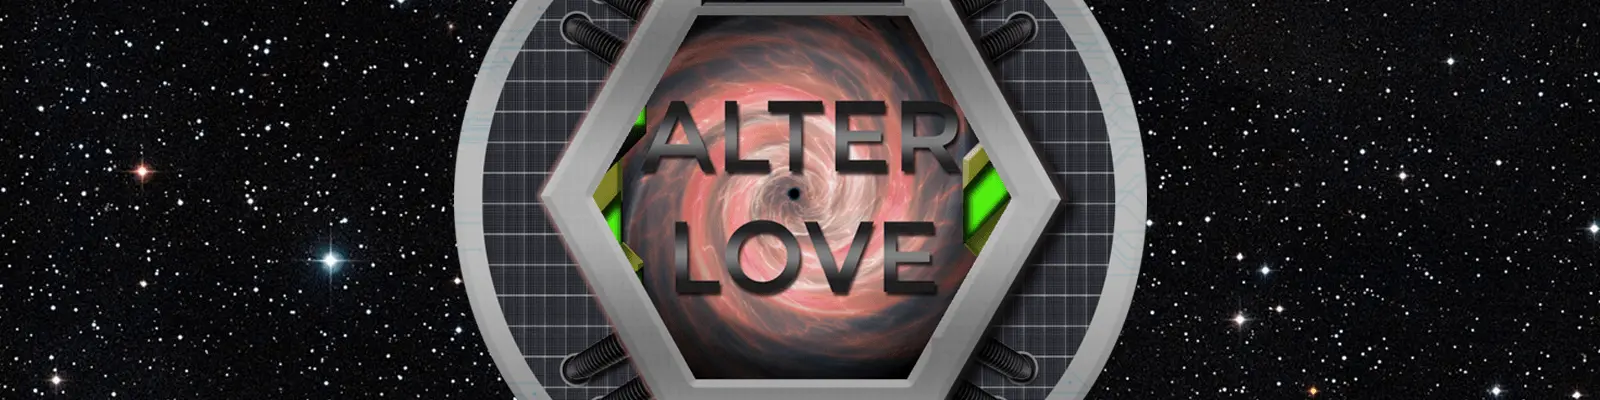 Alter Love [v0.0.1] main image